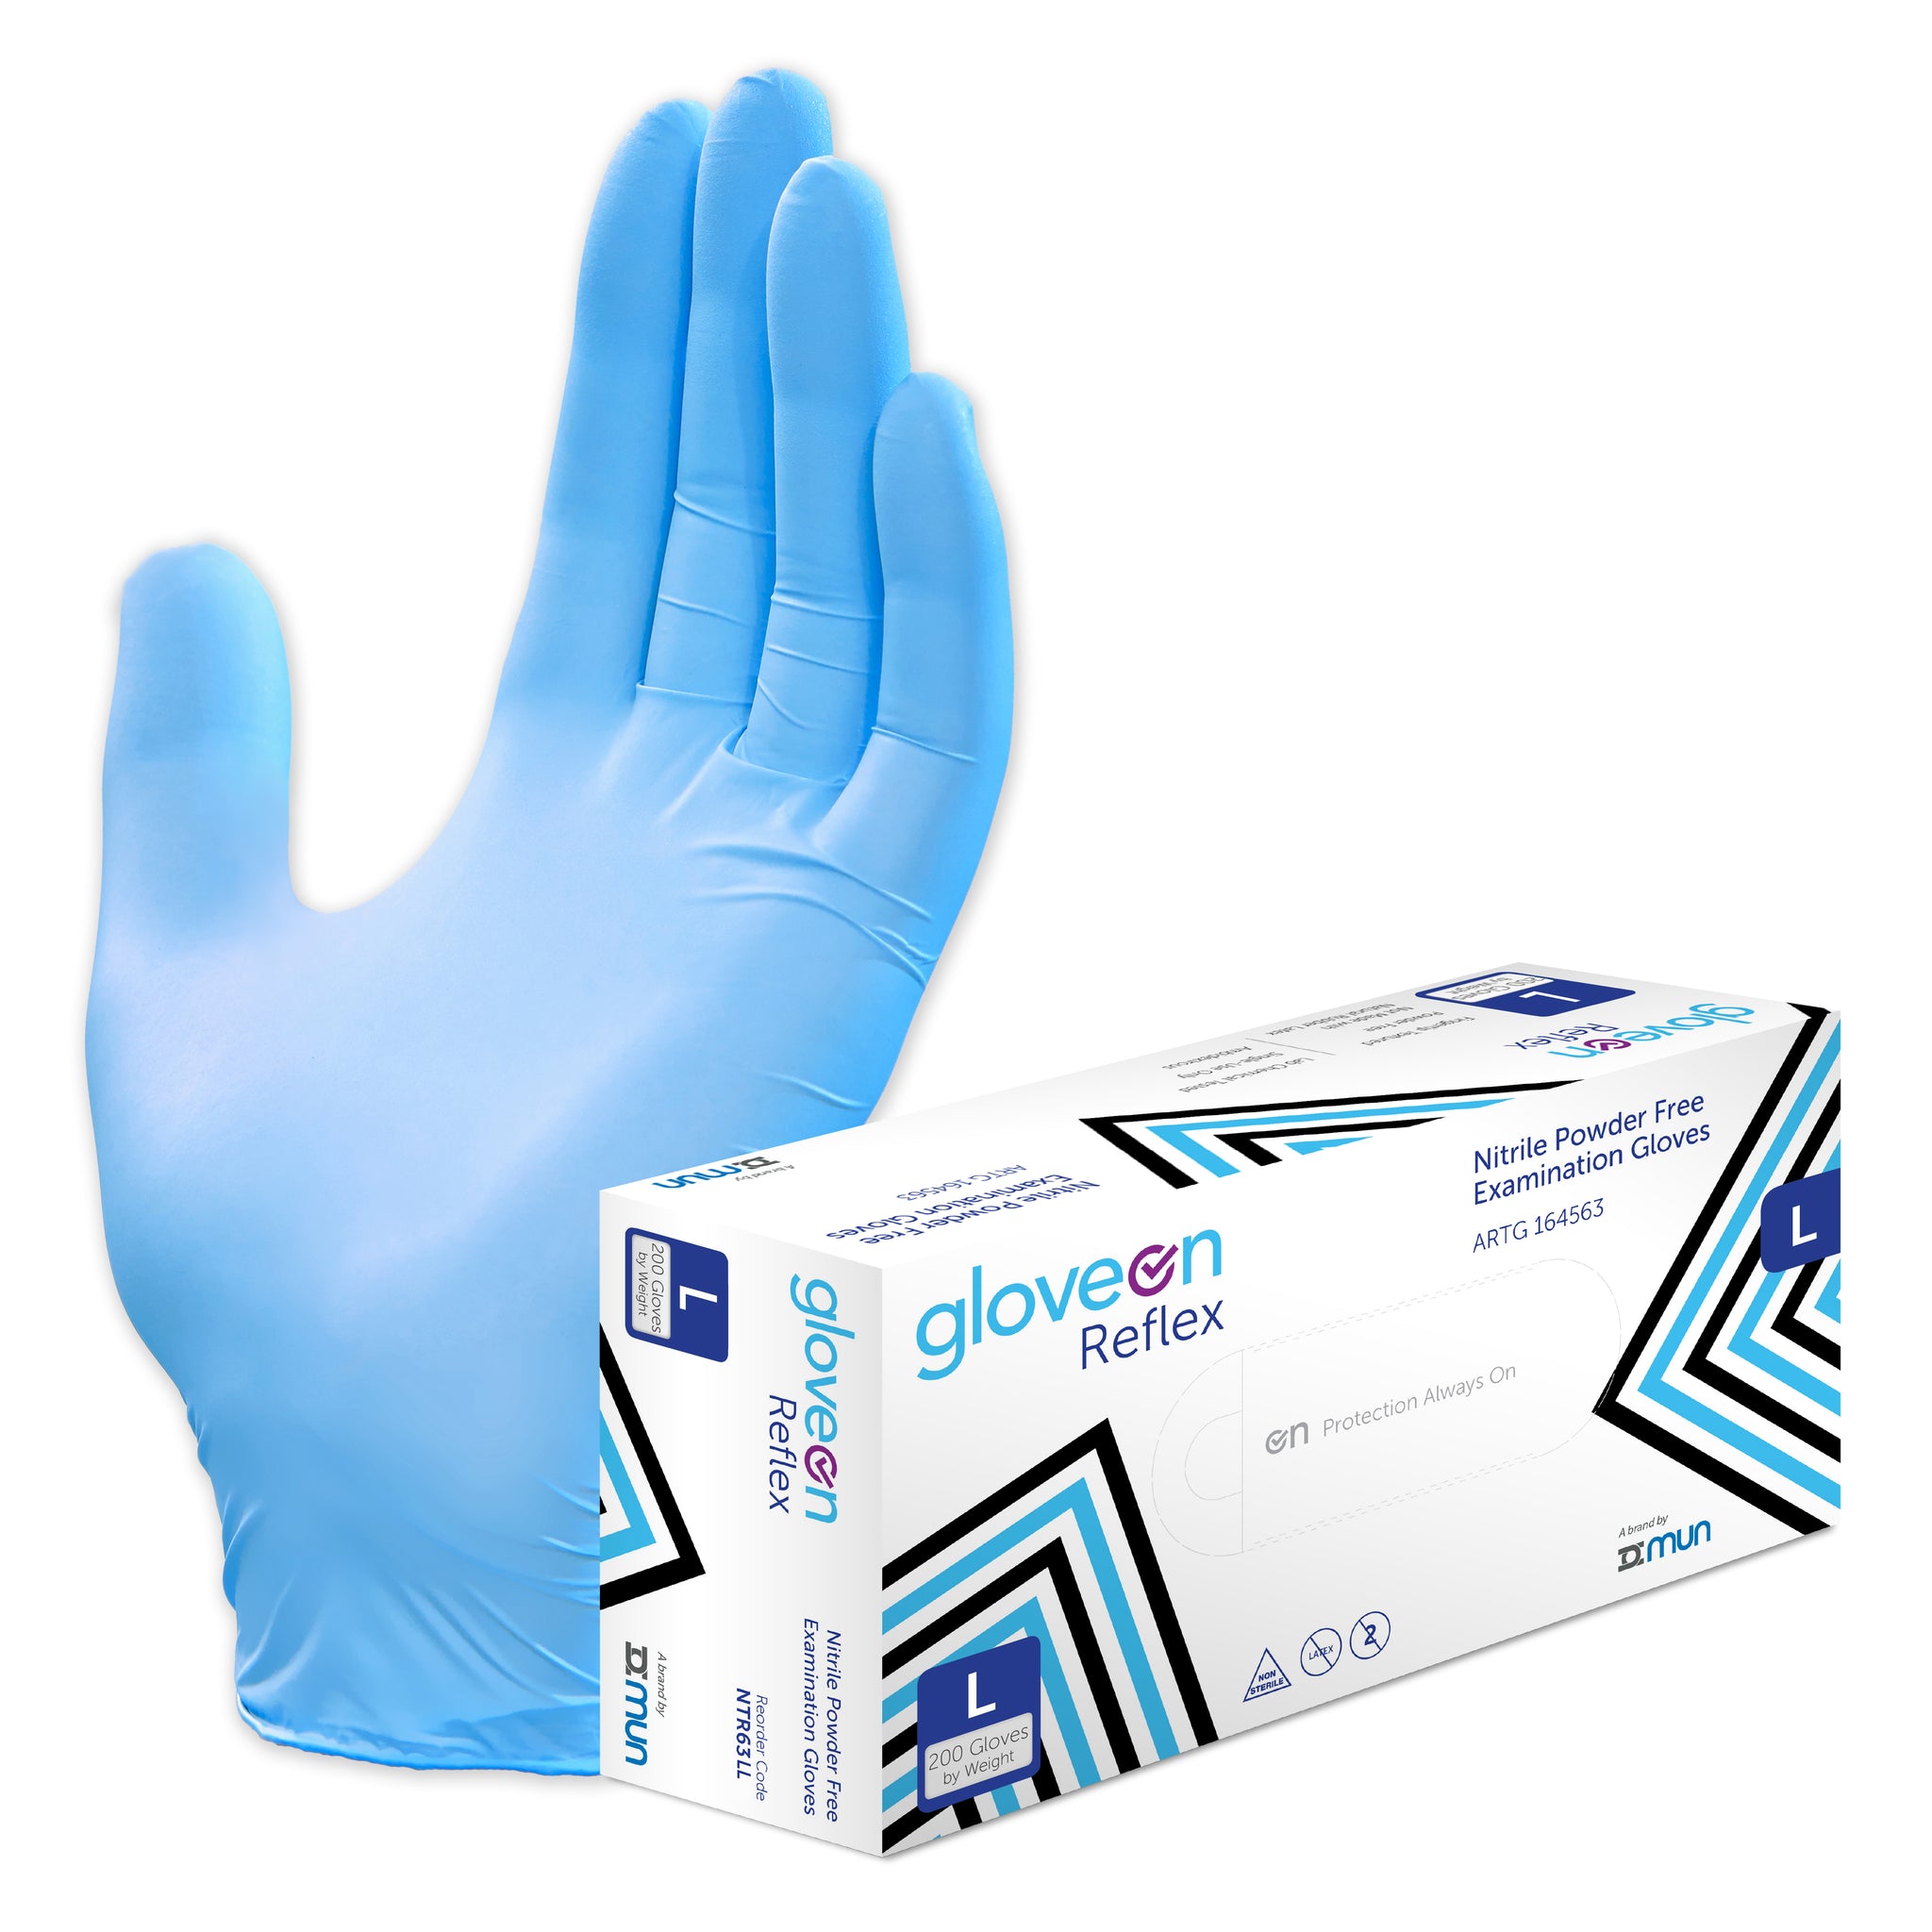 Nitrile Exam Gloves, Powder Free, Non-Sterile, Fingertip Textured, Standard Cuff - Box of 200, L